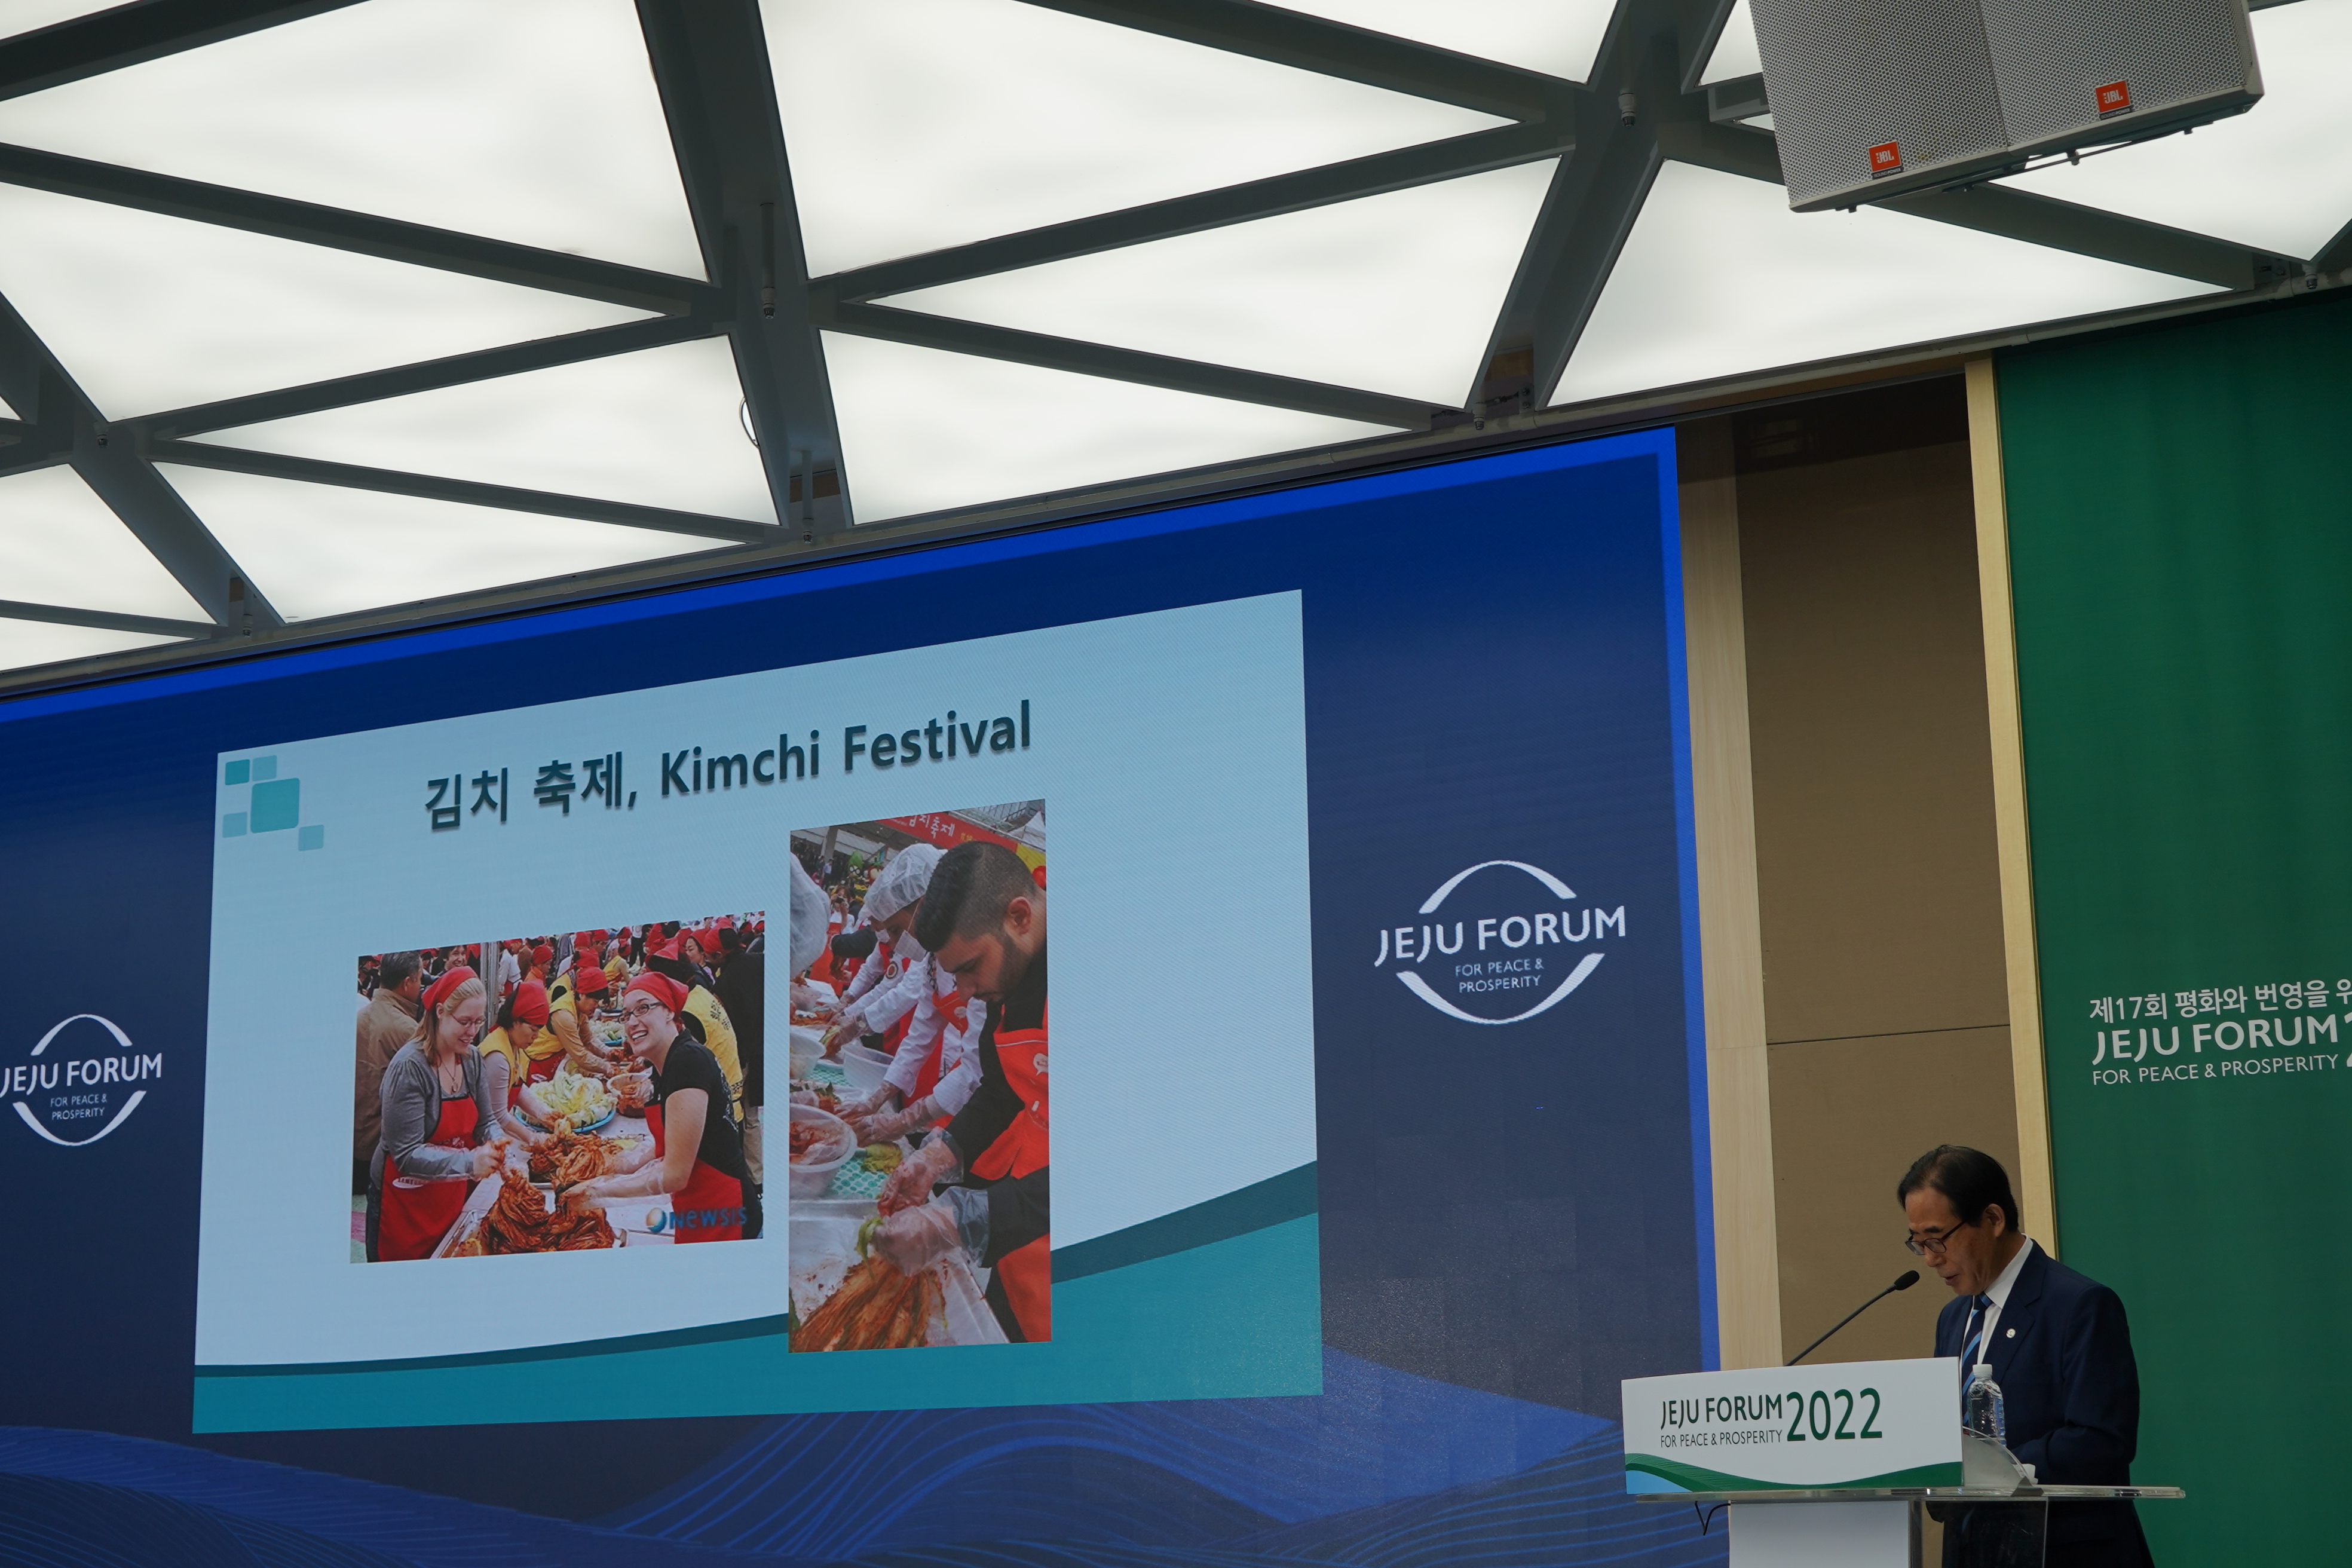 Chairman Kim Sung-kon introducing the Kimchi Festival as an example of global Koreans’ public diplomacy activities